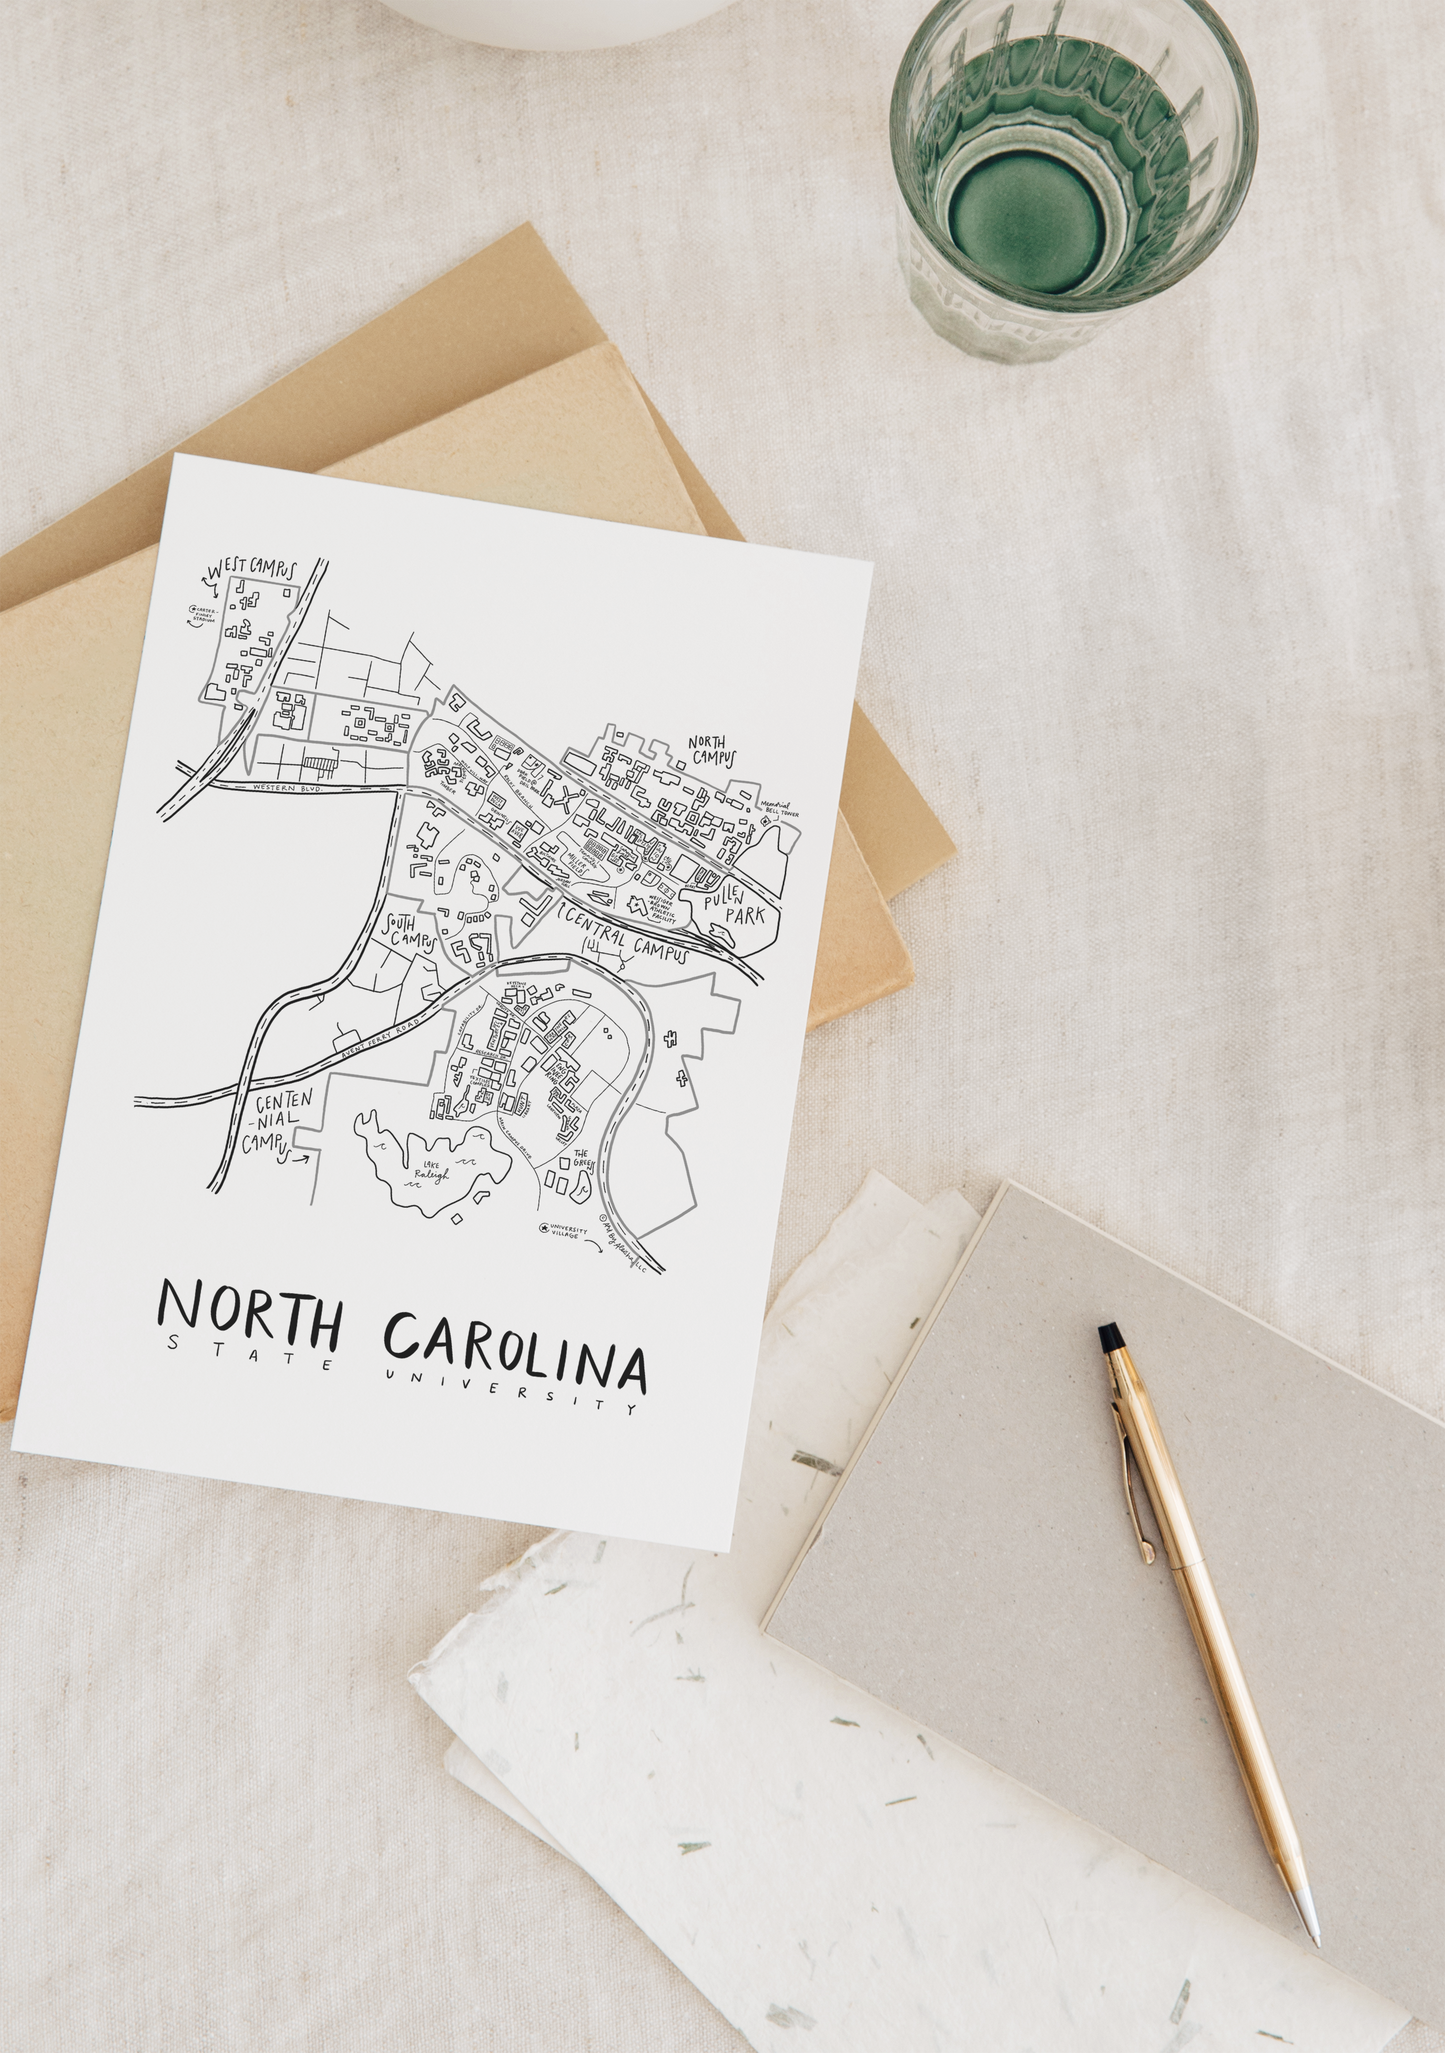 North Carolina State University Campus Map Print